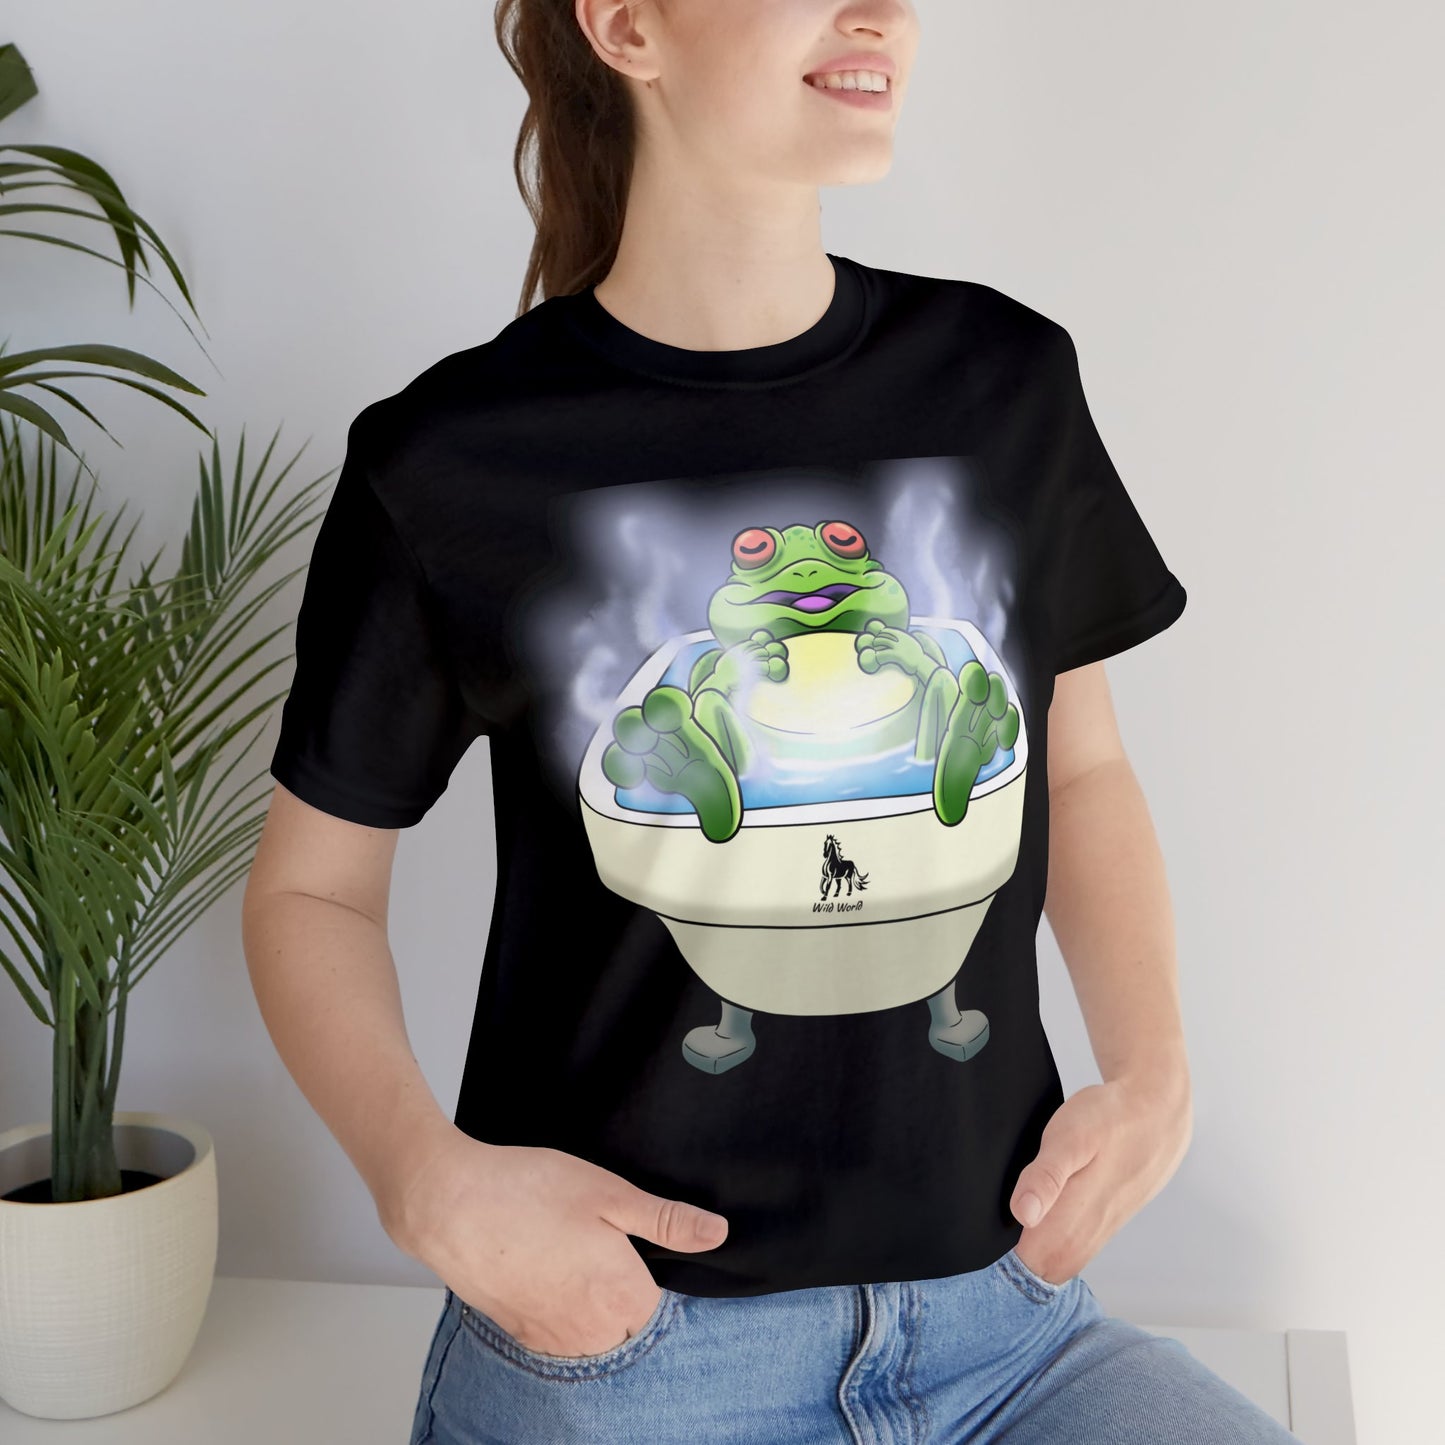 Hot Tub Frog